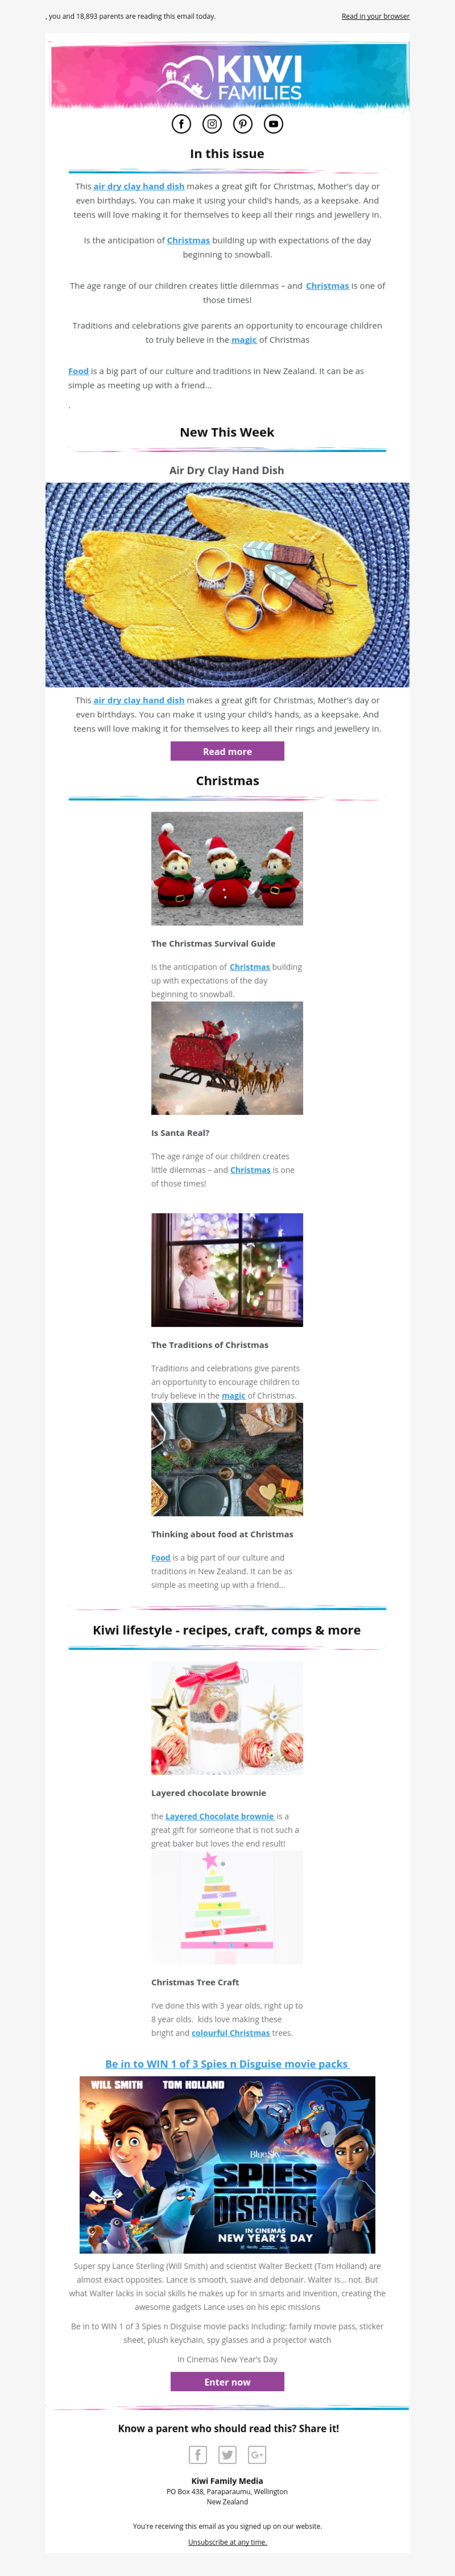 Kiwi Family Media - Christmas example - Made with MailerLite